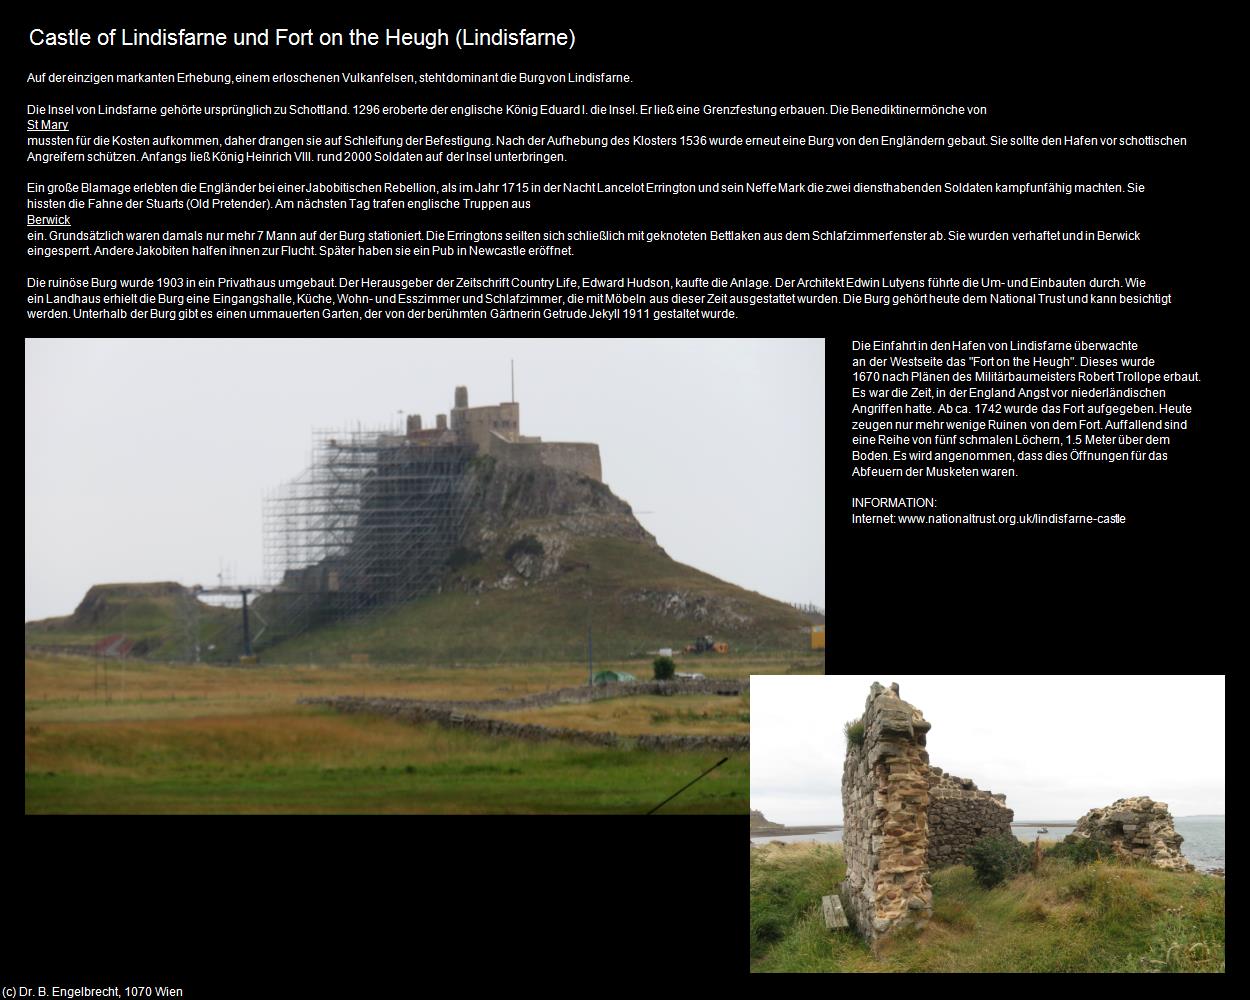 Castle of Lindisfarne u. Fort on the Heugh  (Lindisfarne, England) in Kulturatlas-ENGLAND und WALES(c)B.Engelbrecht